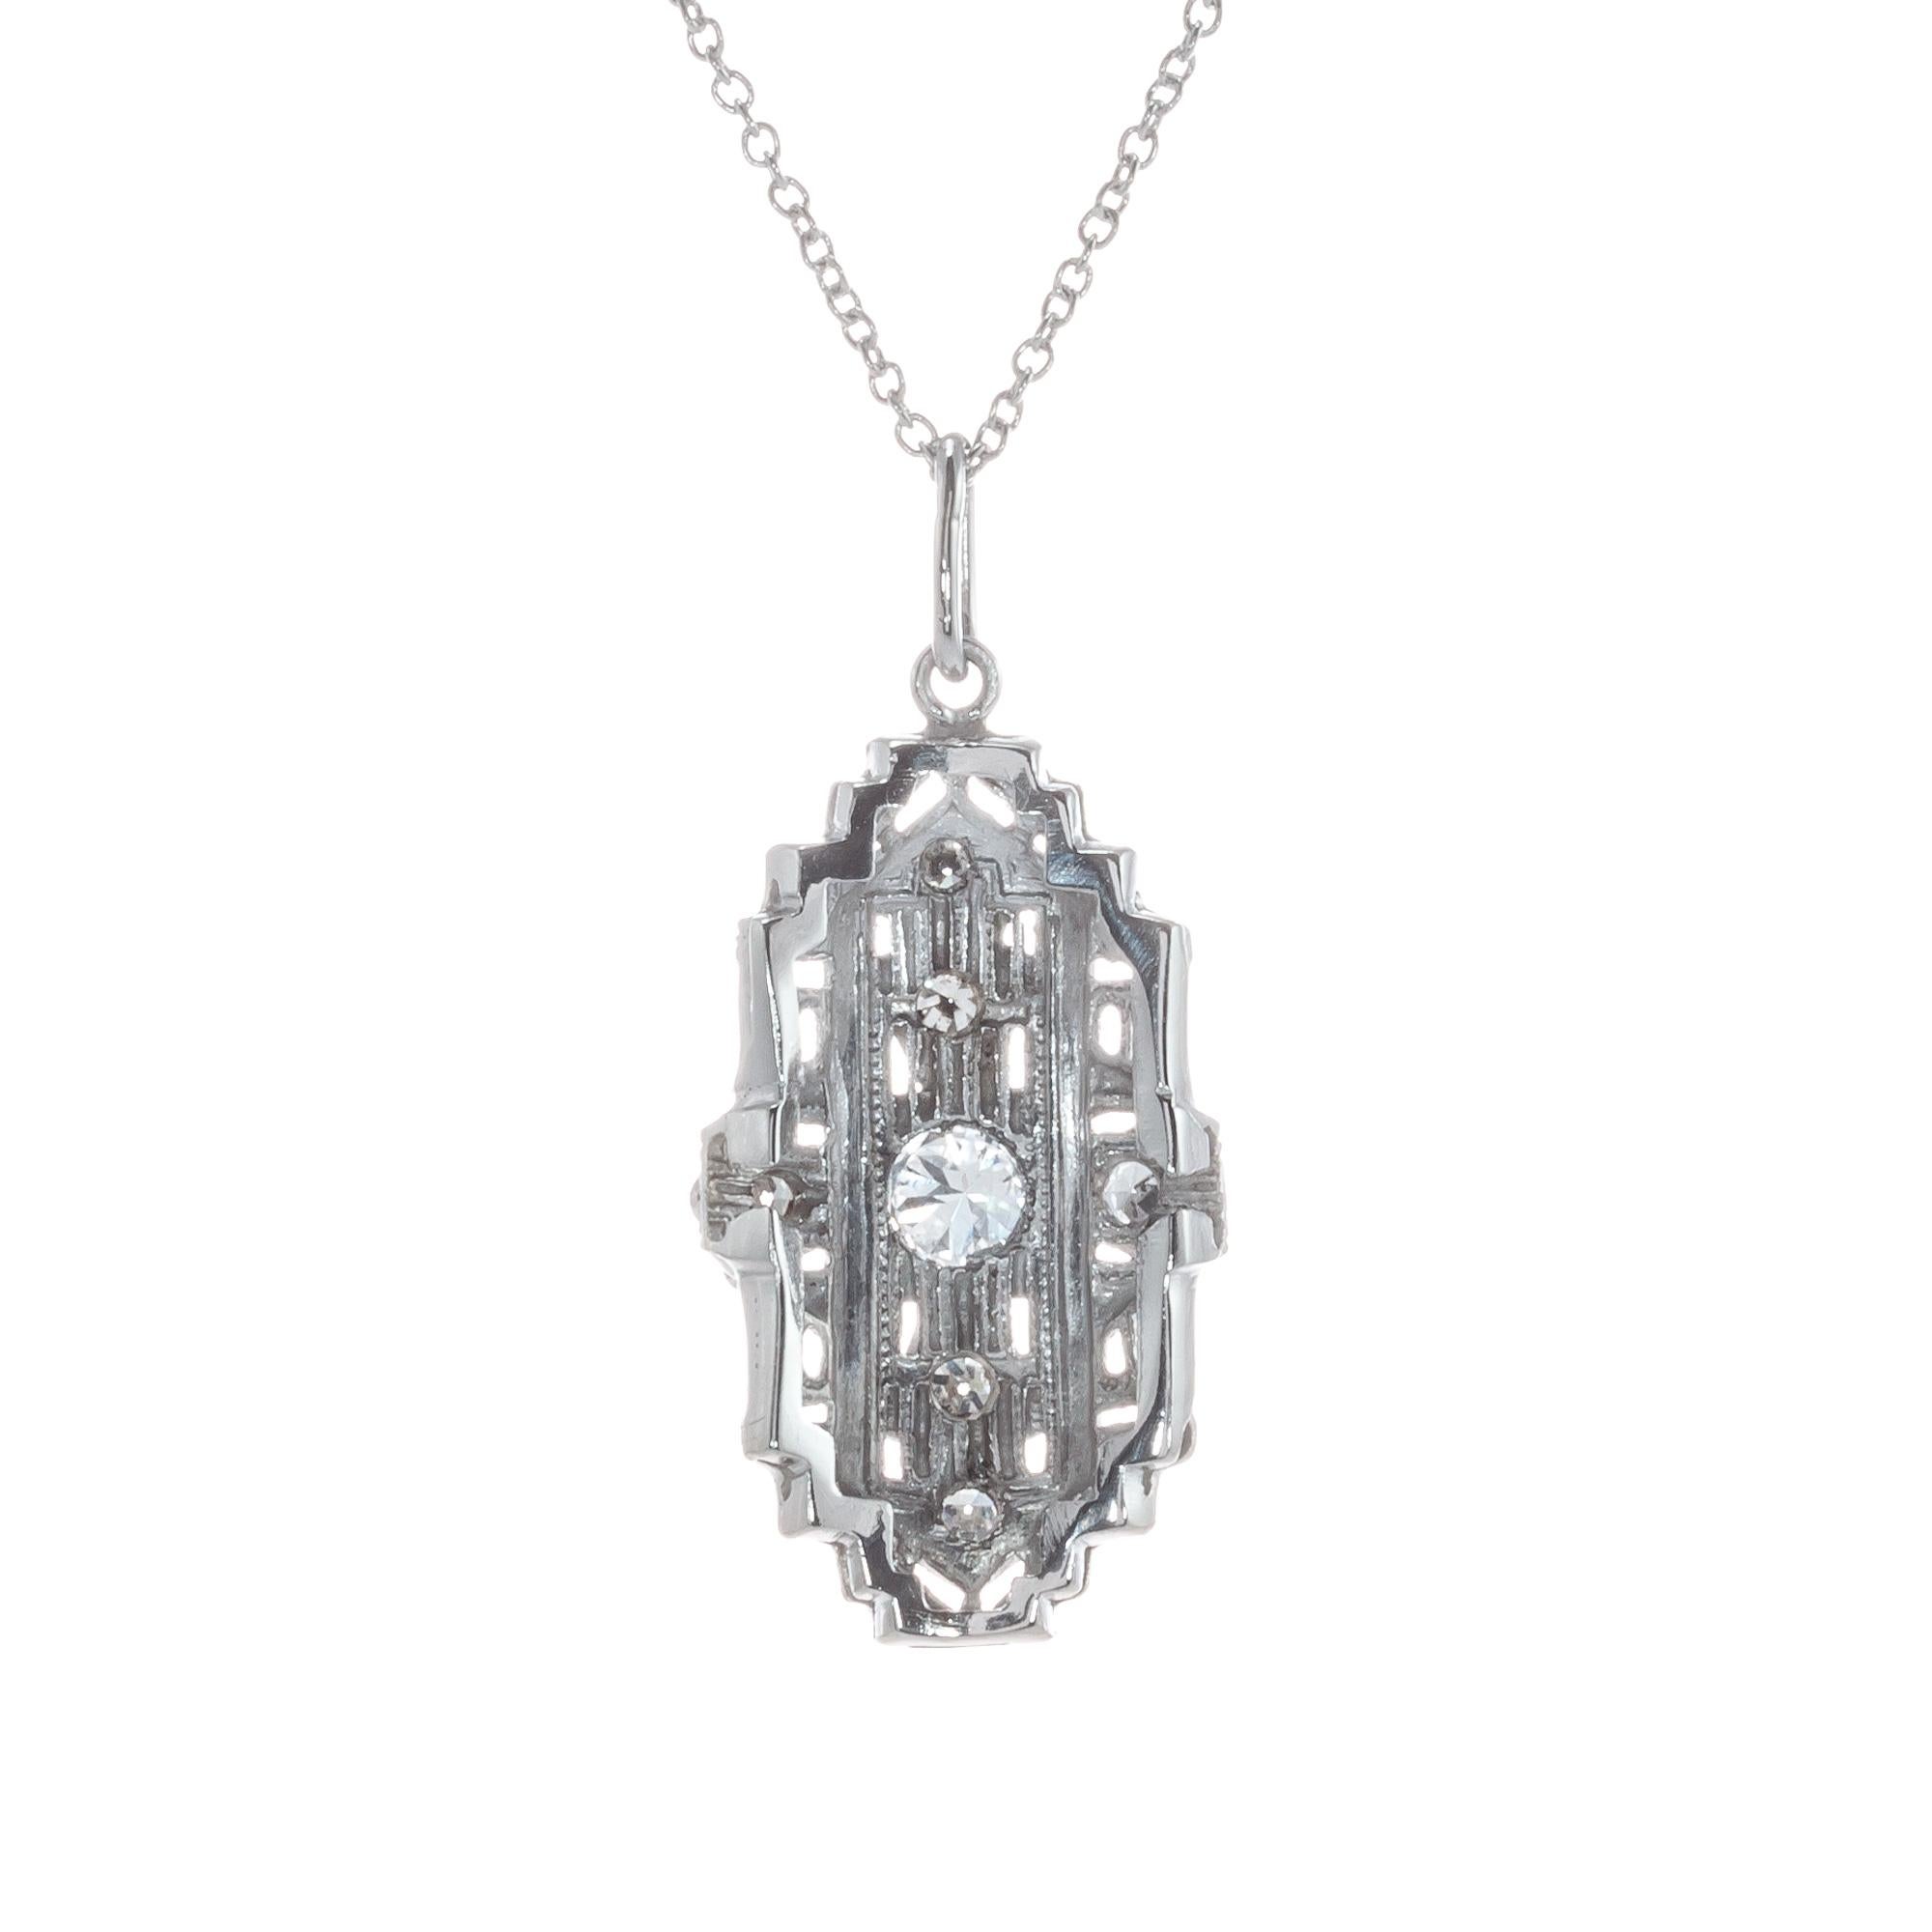 1920's Art Deco platinum diamond pierced filigree pendant and necklace.

1 round H VS2 Diamond, Approximate .15ct 
6 single cut H-I VS diamonds, Approximate .18cts
Chain: 18 Inches
Platinum 
Stamped: PT950
4.2 Grams
Top to Bottom: 24.9mm or 1